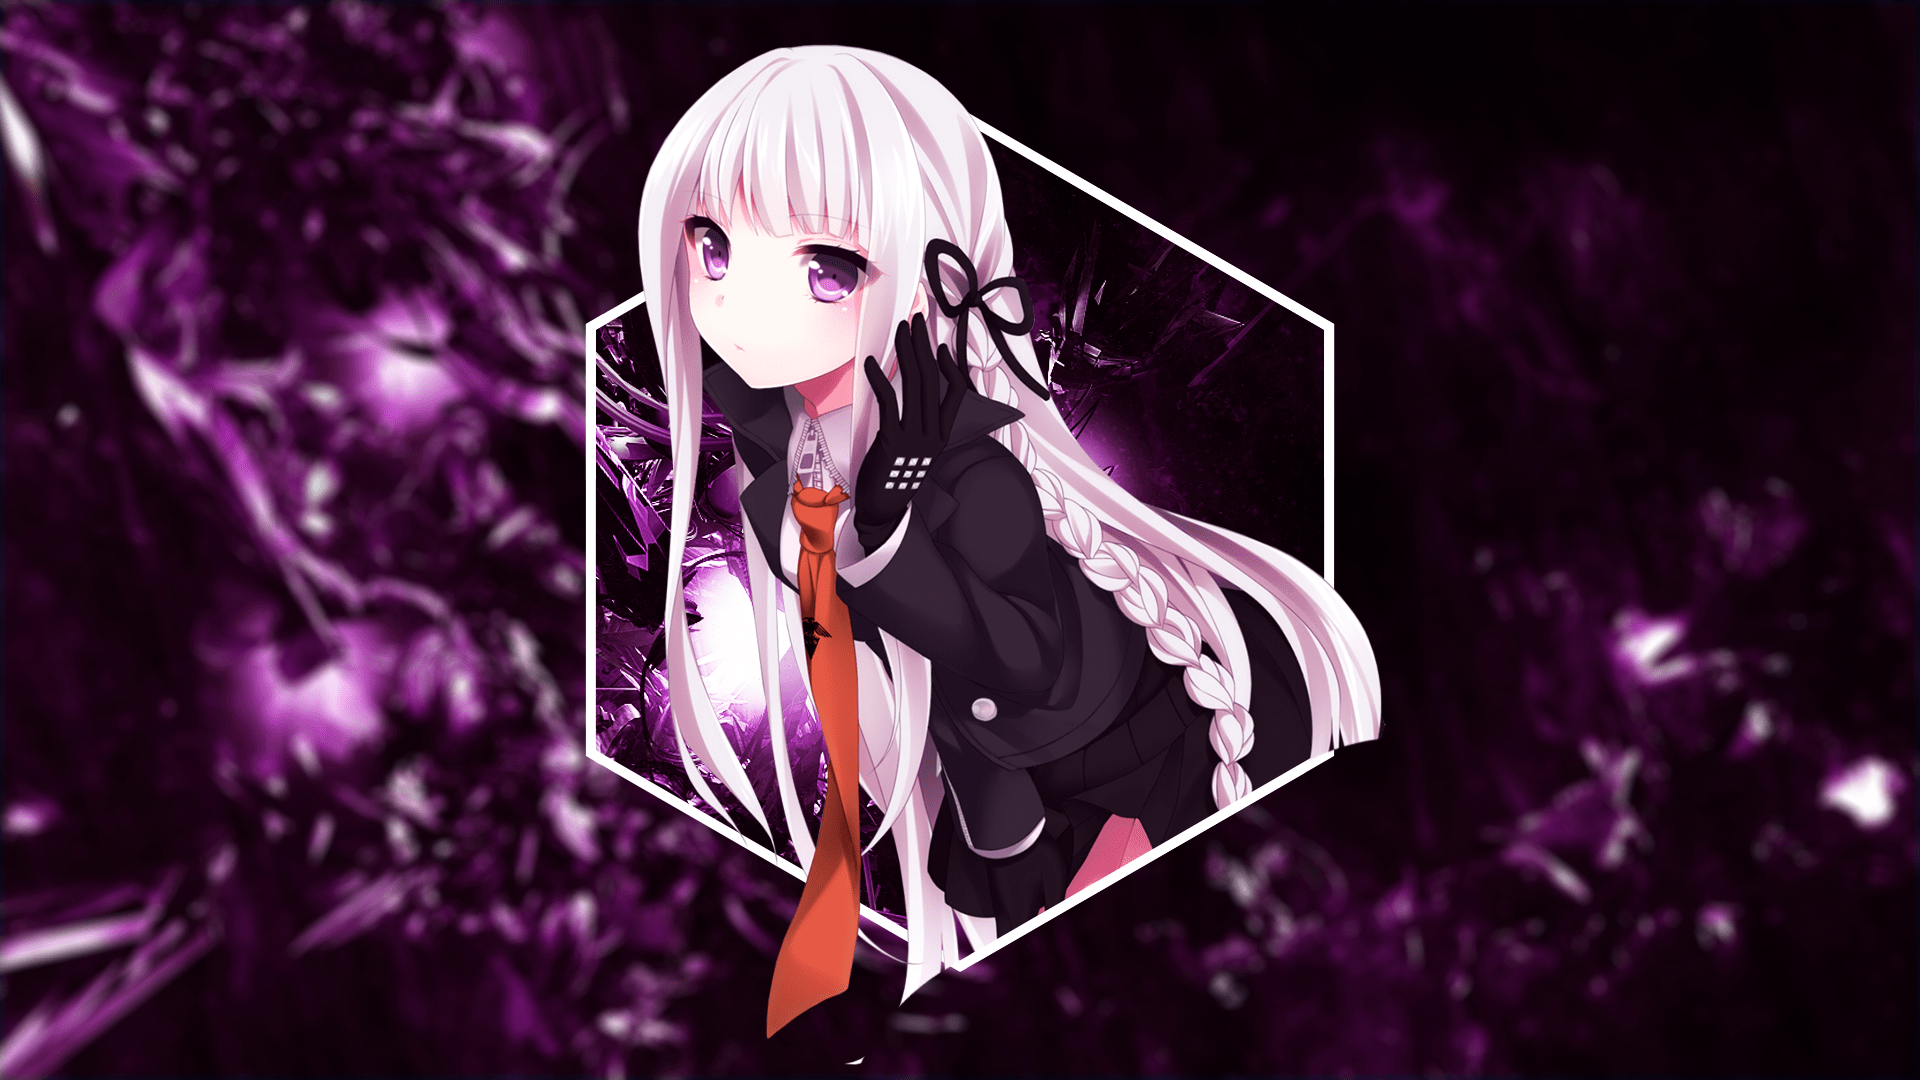 Anime girl with white hair, purple eyes, red tie, black jacket, purple background - Danganronpa